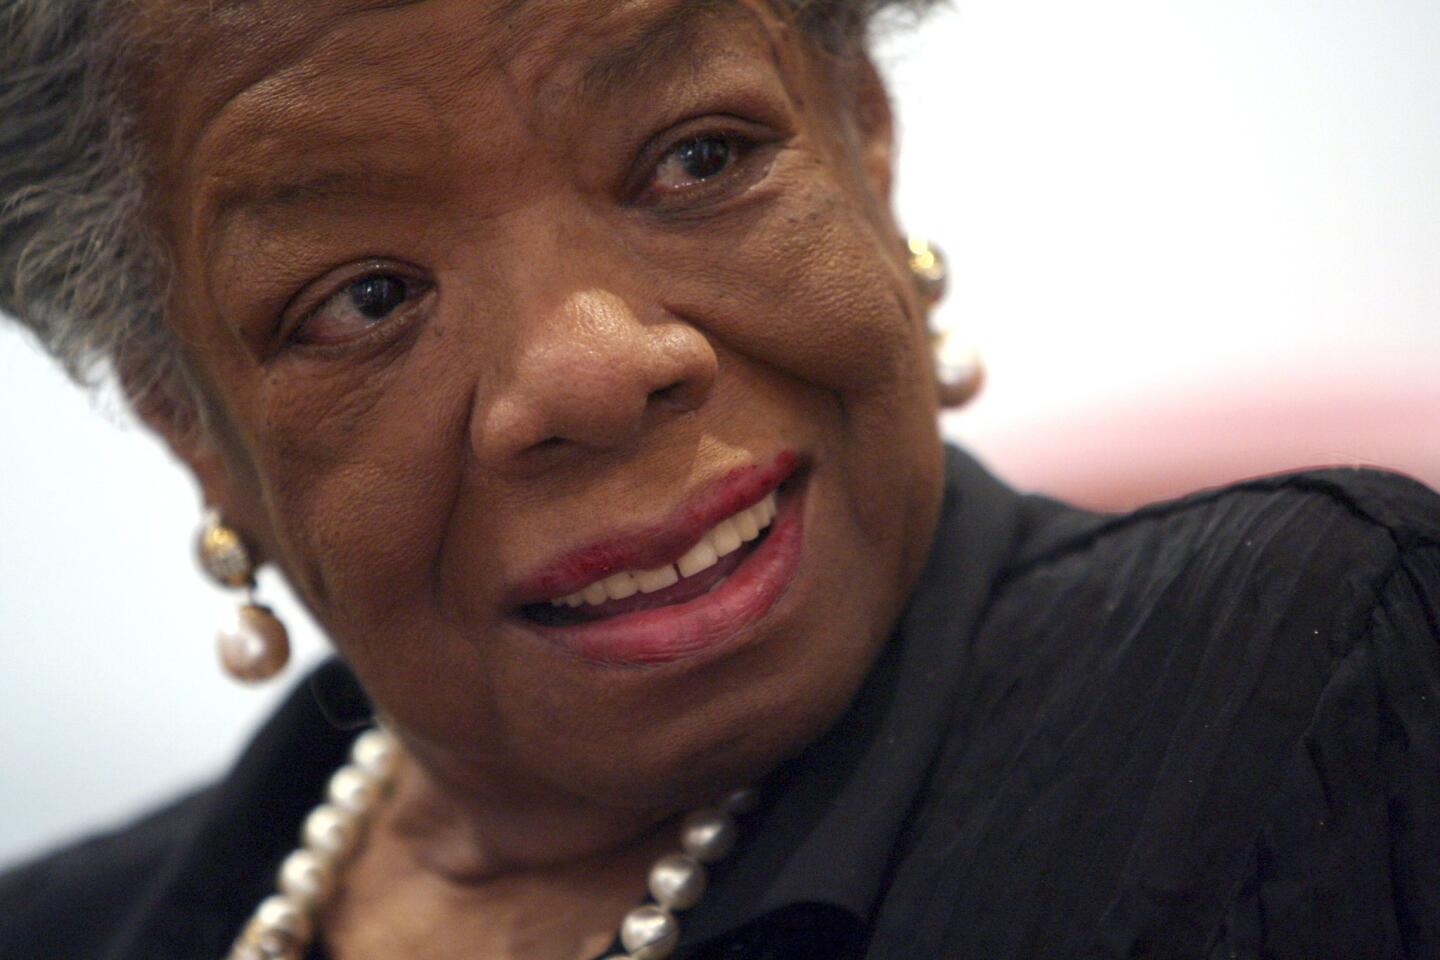 American poet and novelist Maya Angelou died on May 28 at 86. A private memorial service was held on June 7 in Winston-Salem, N.C.